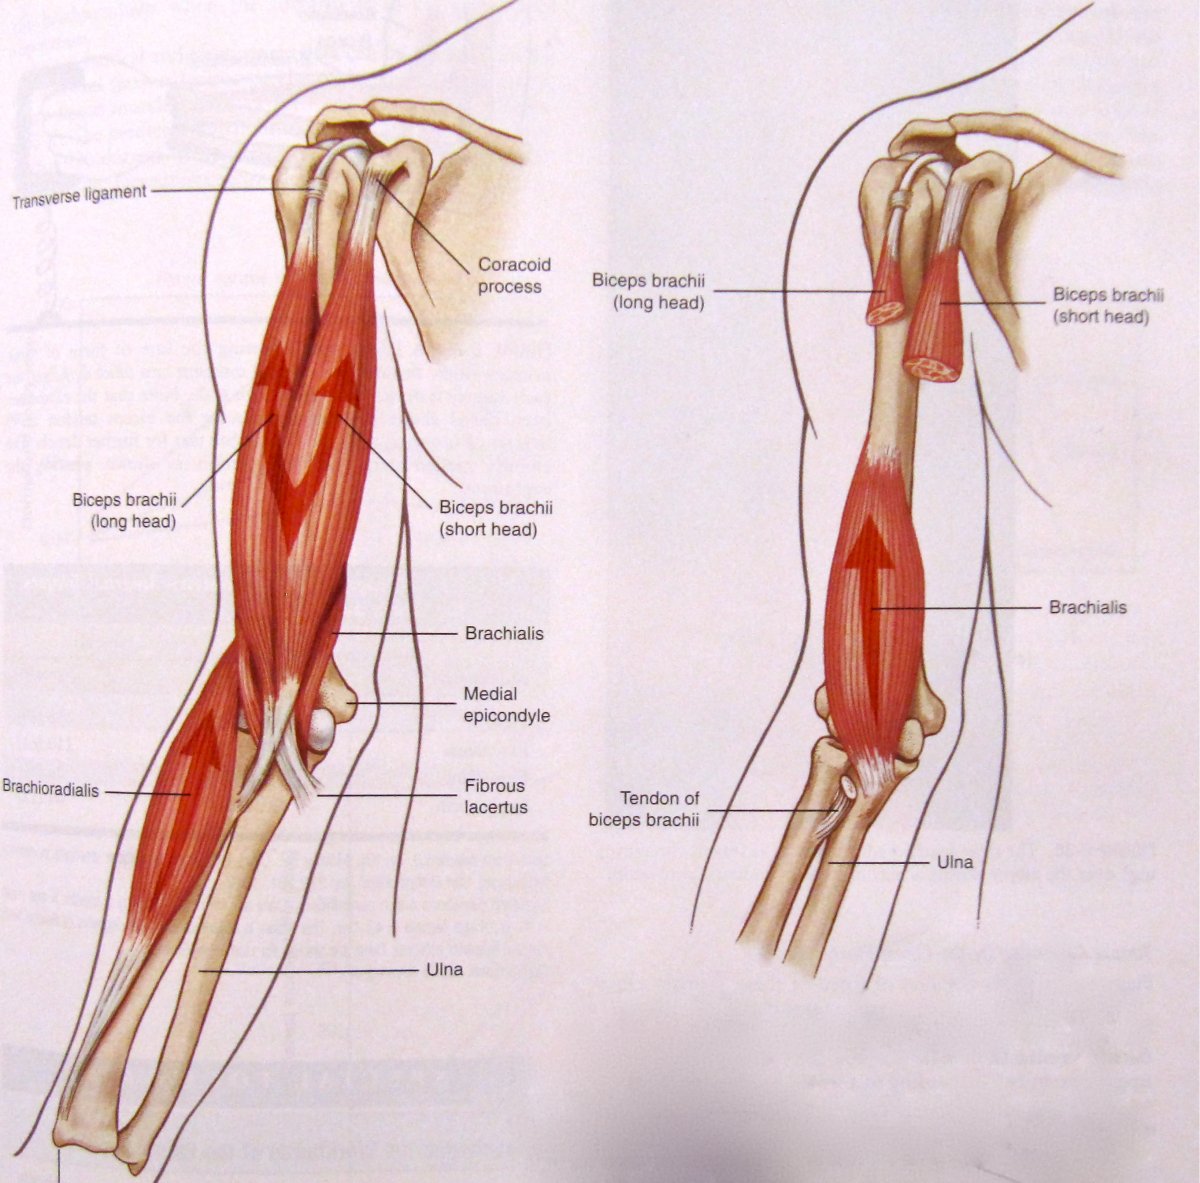 Атлас мышц руки человека анатомия